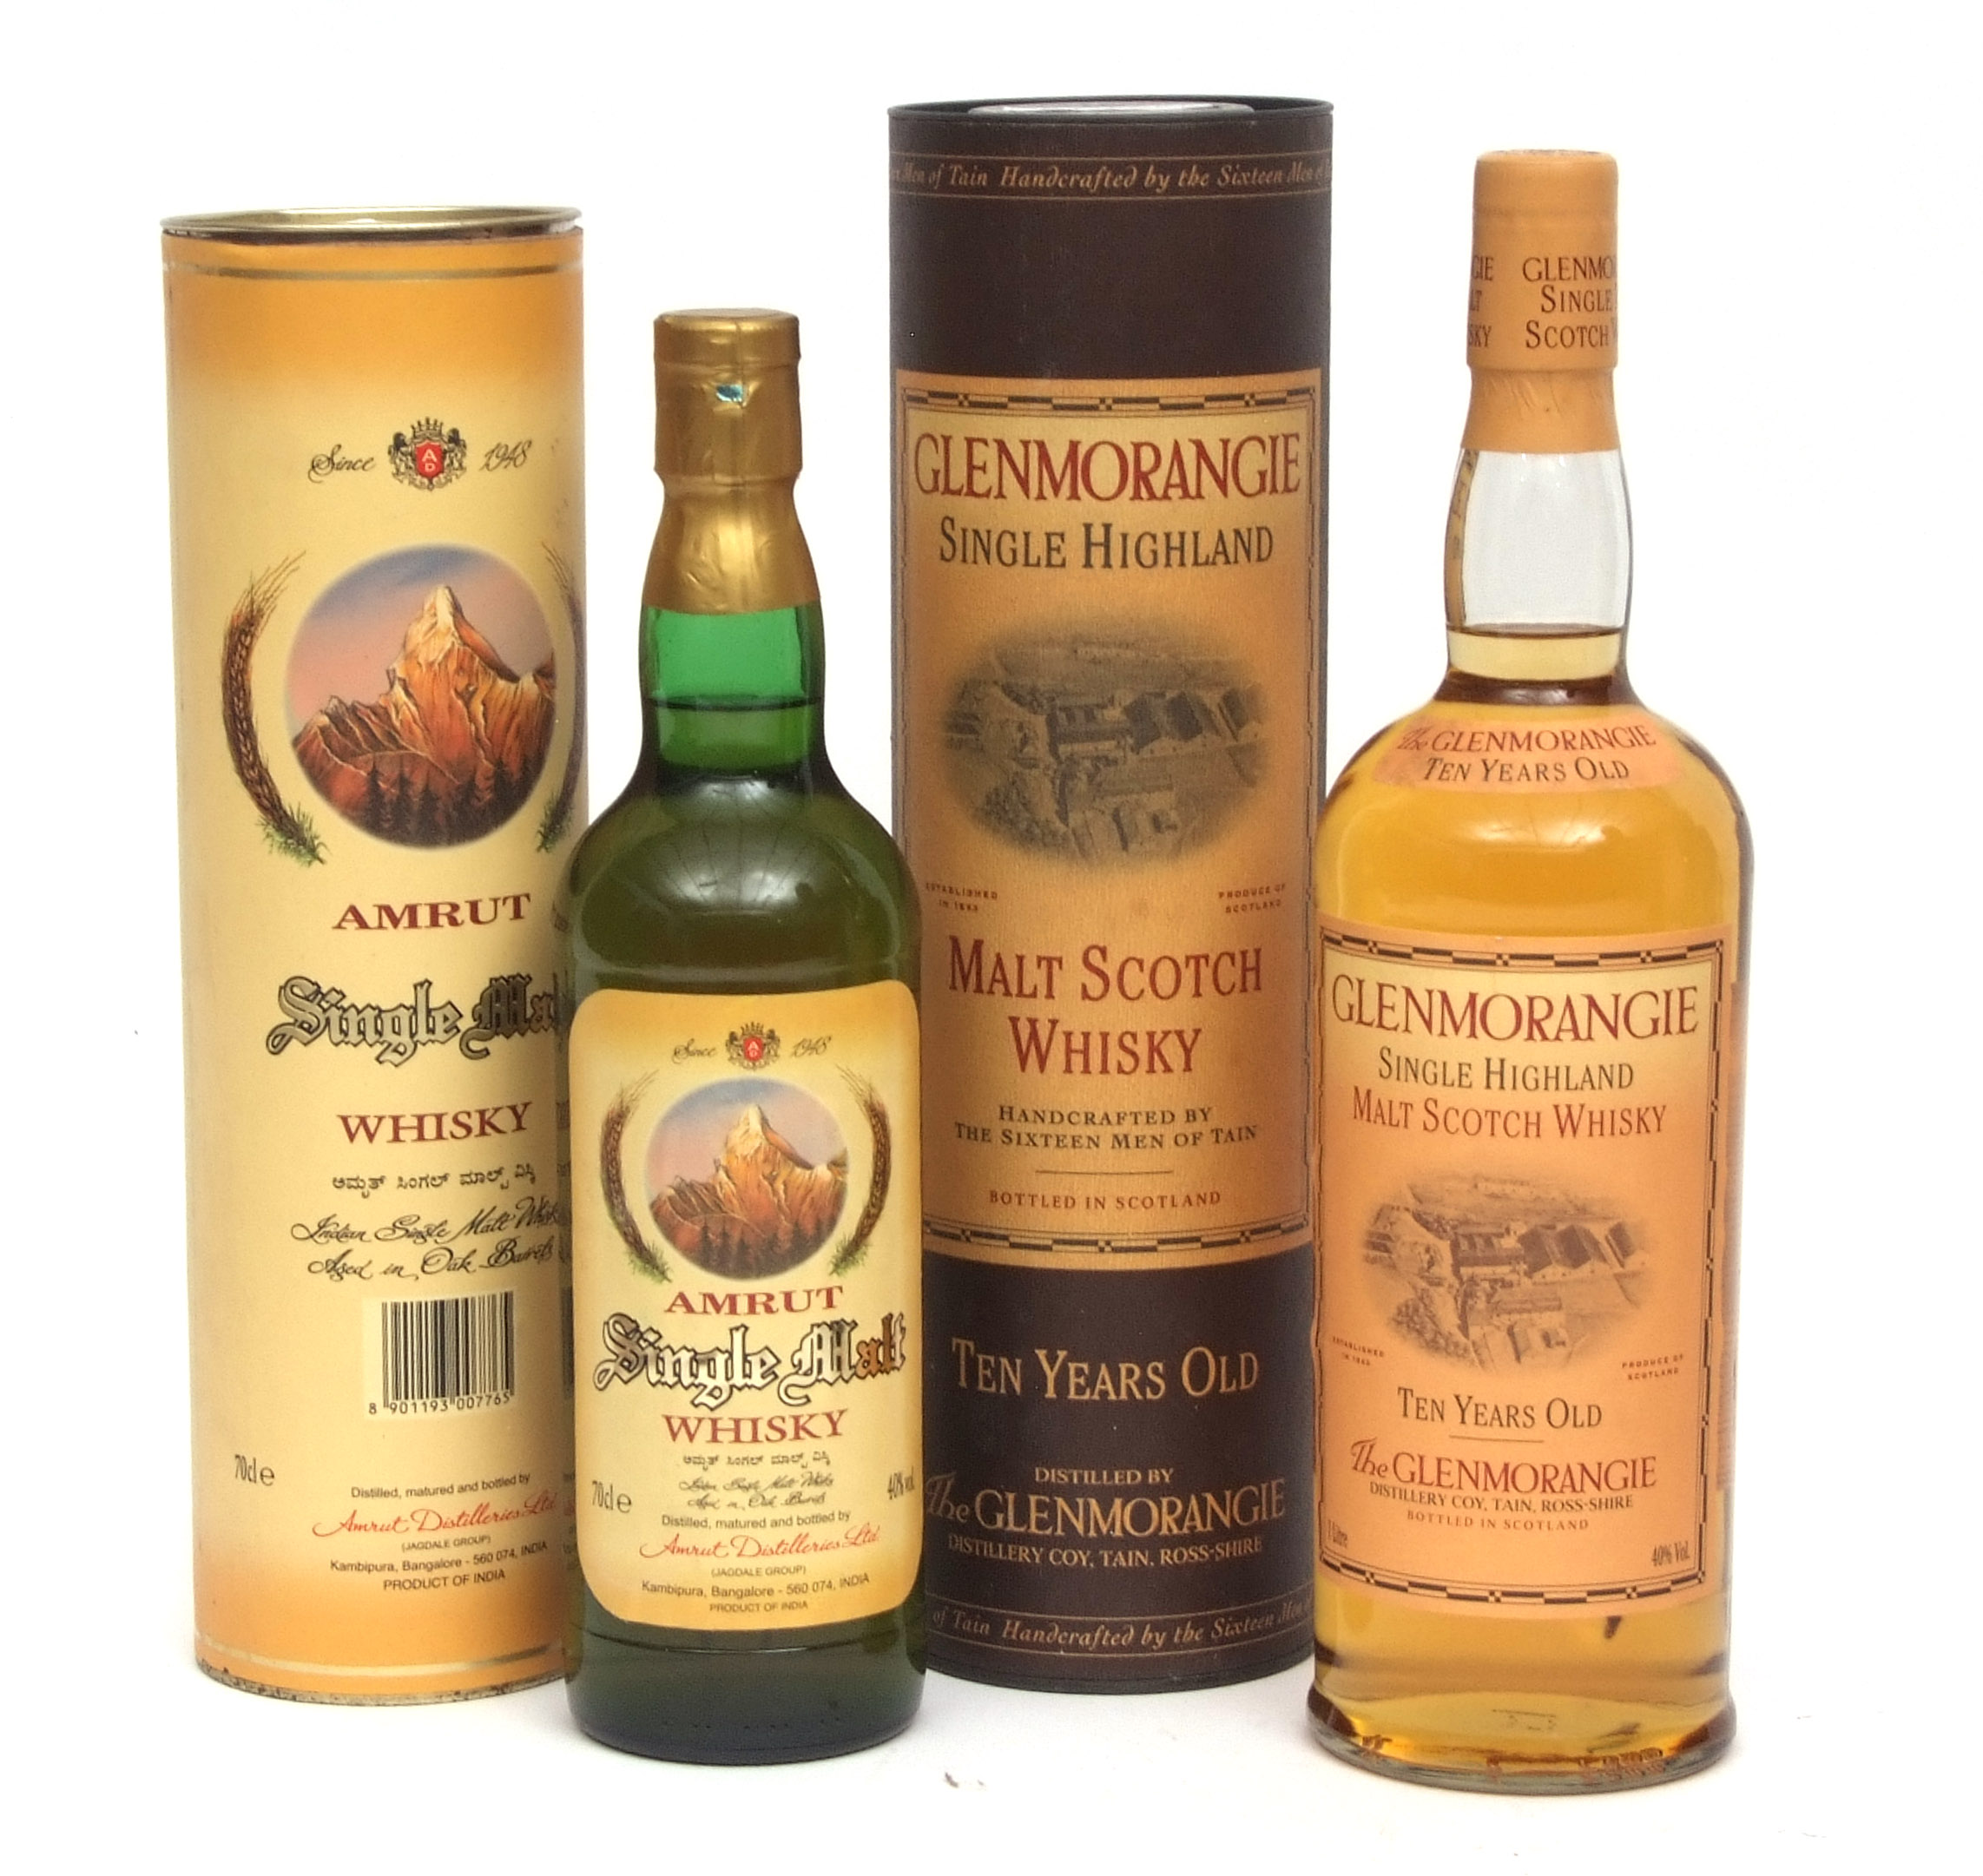 Glen Morangie 10 year old single Highland malt Scotch Whisky, 1ltr, 40% vol (in carton) and Amrut